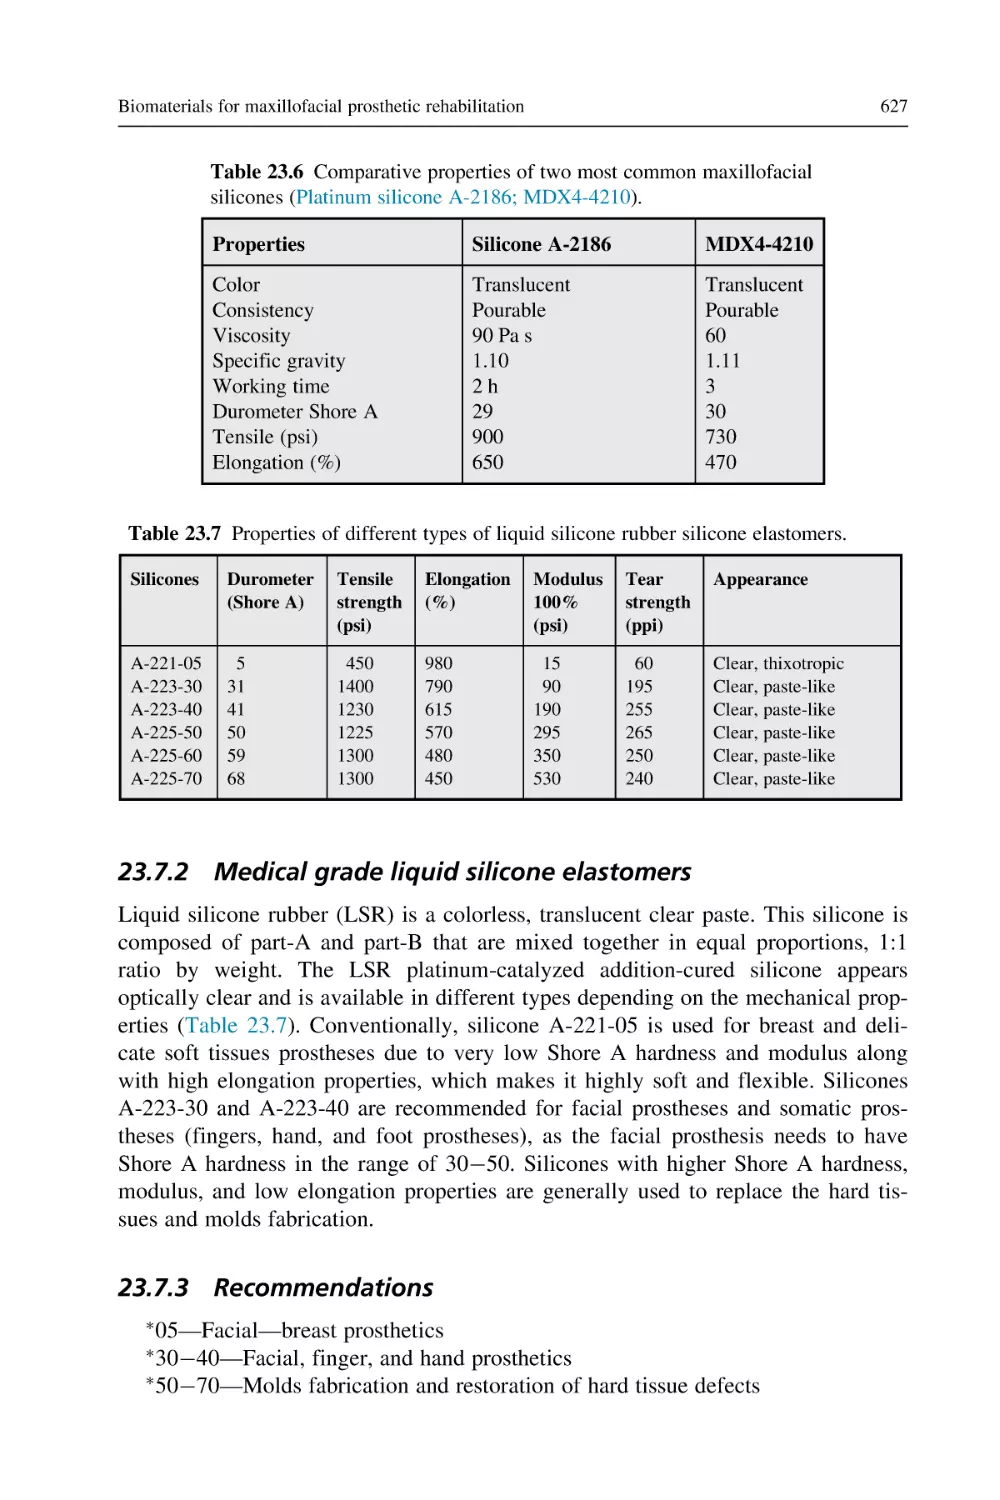 23.7.2 Medical grade liquid silicone elastomers
23.7.3 Recommendations